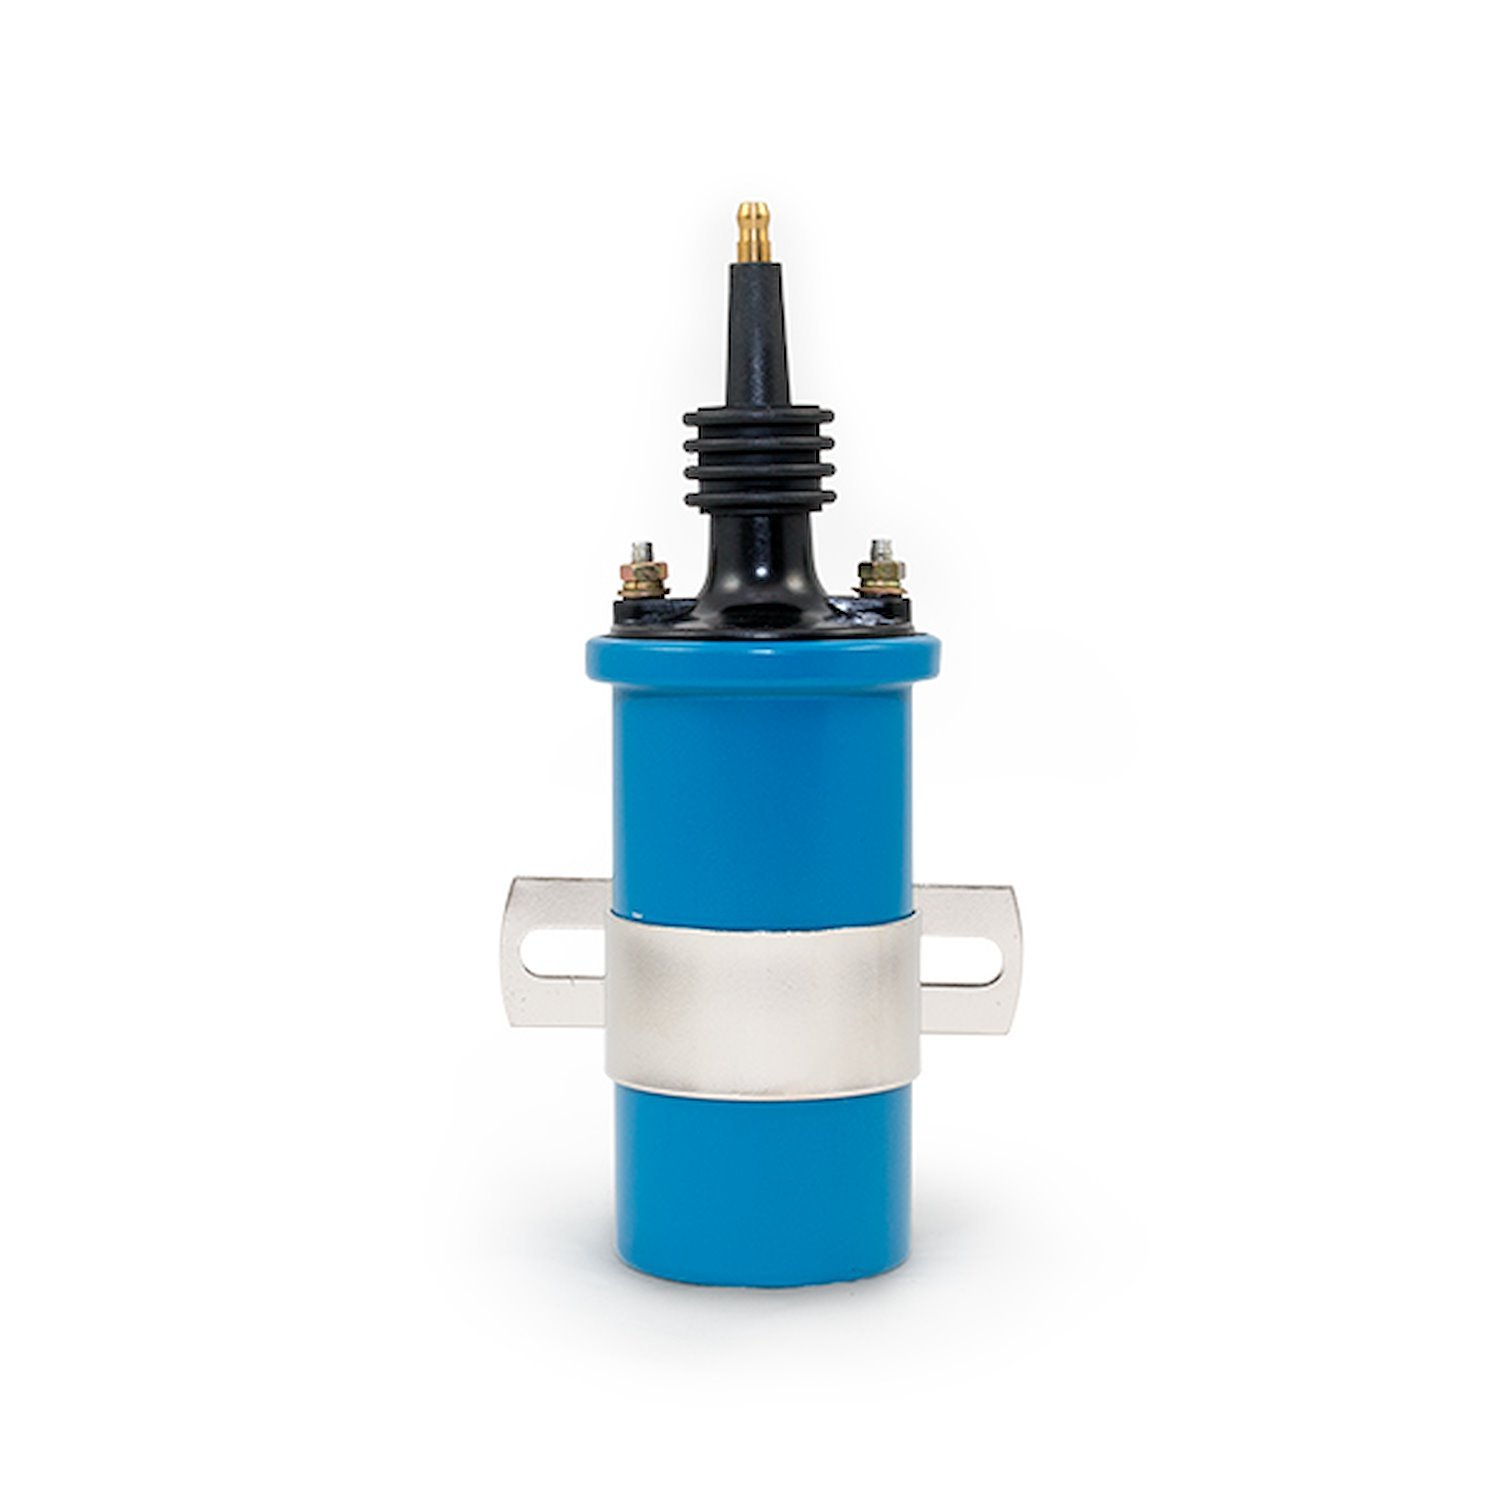 JM6928BL Ignition Coil, Oil-Filled Canister Style, Male Socket, Blue